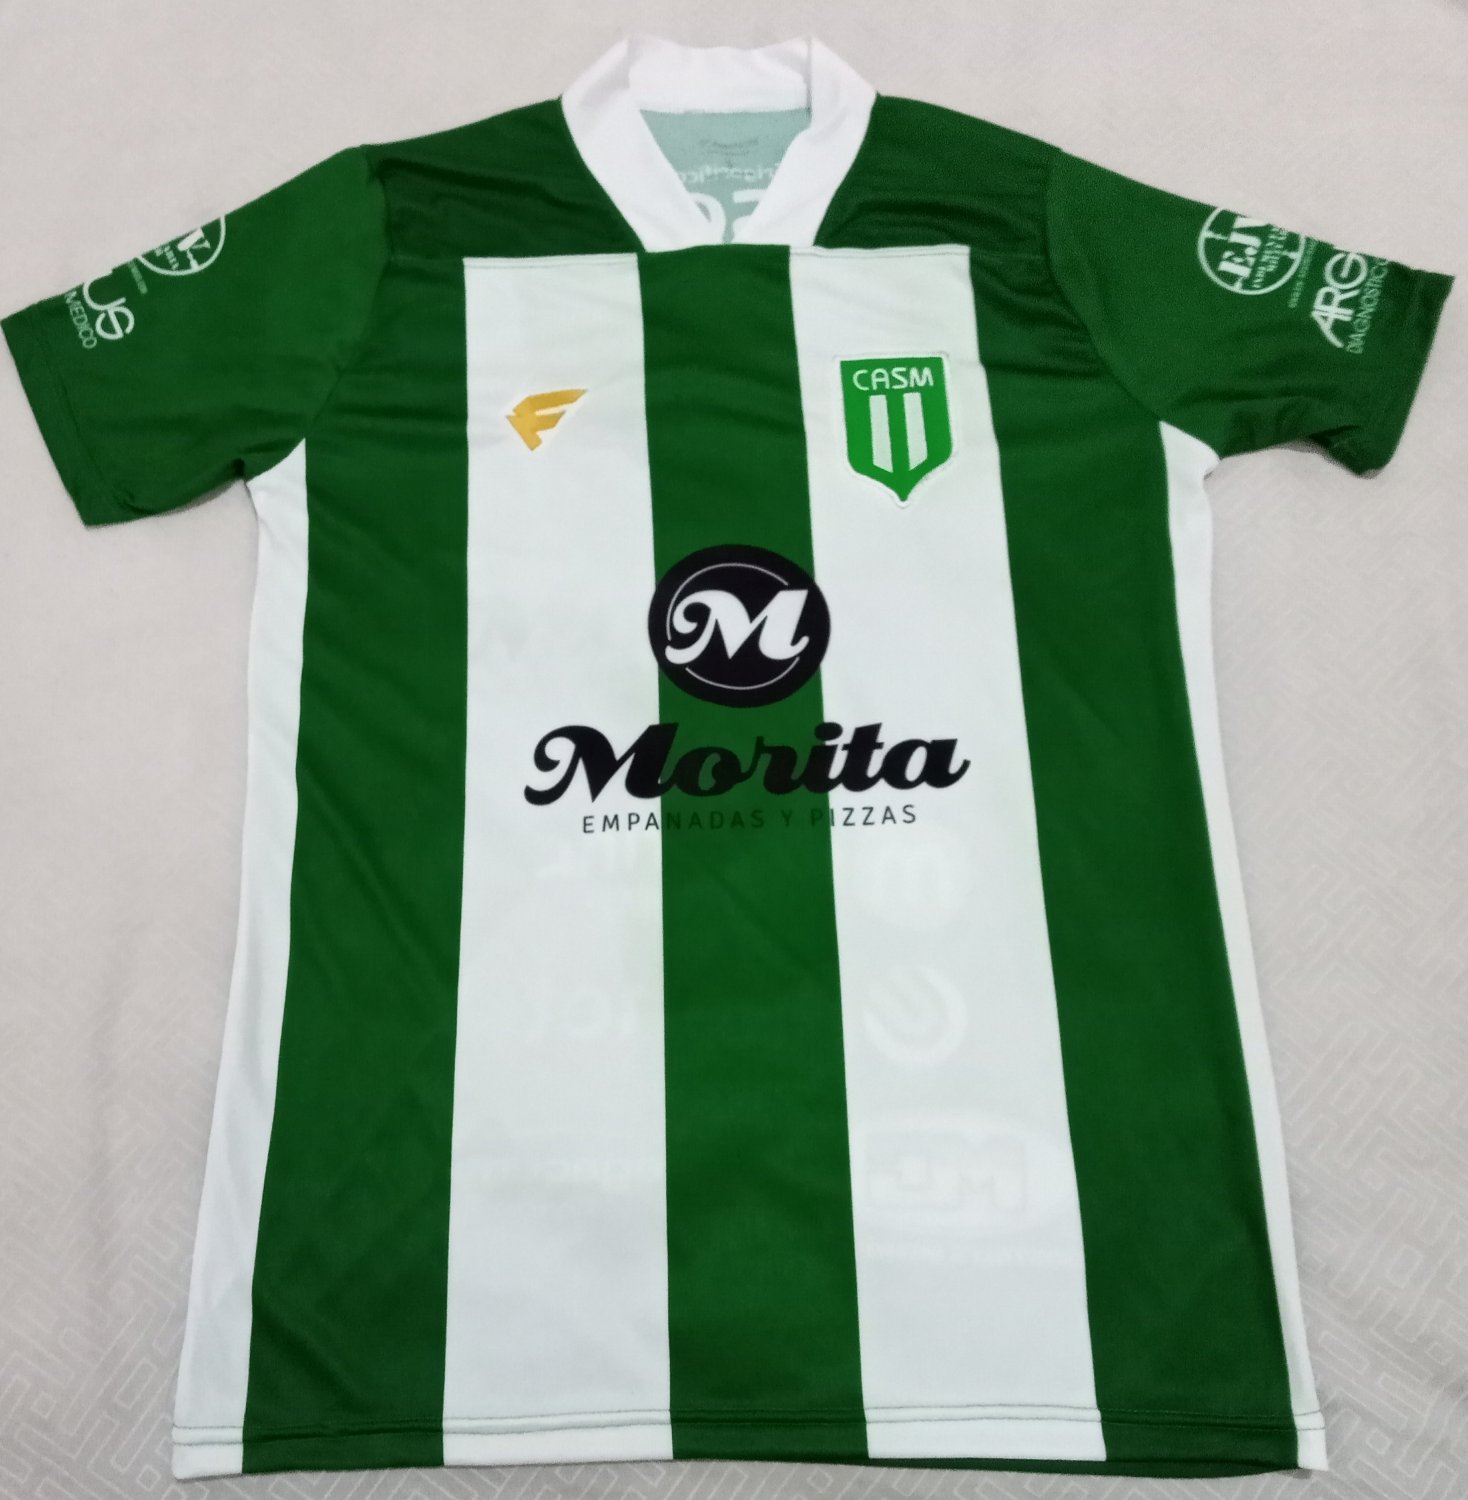 Club Atletico San Miguel Home camisa de futebol 2017. Sponsored by